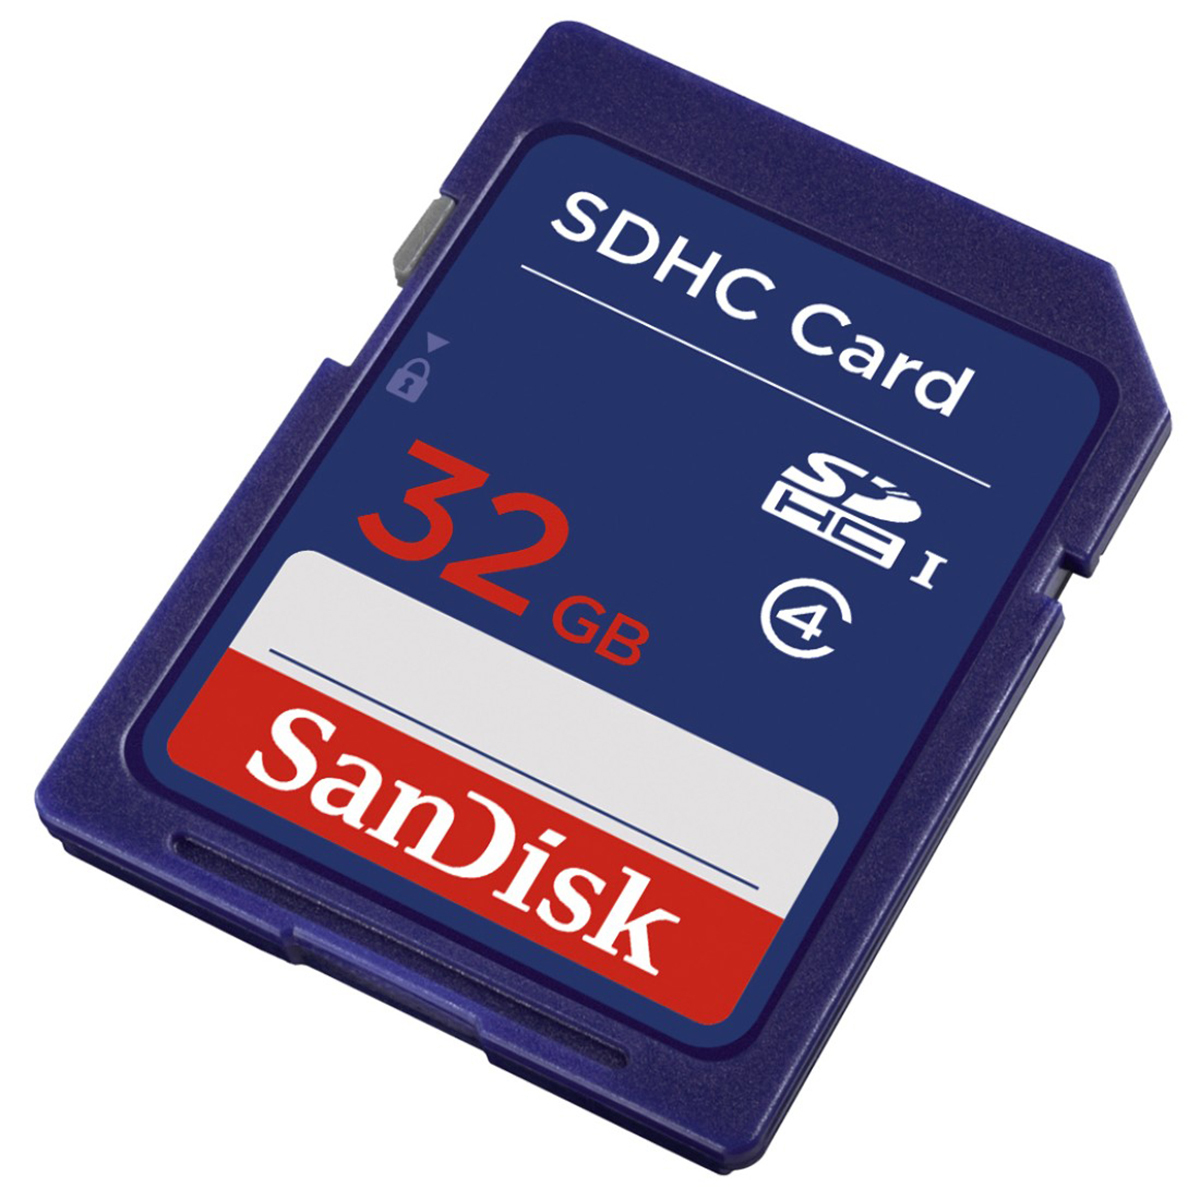 HAMA 94195 SANDISK STANDARD SDHC CARD 32 GB